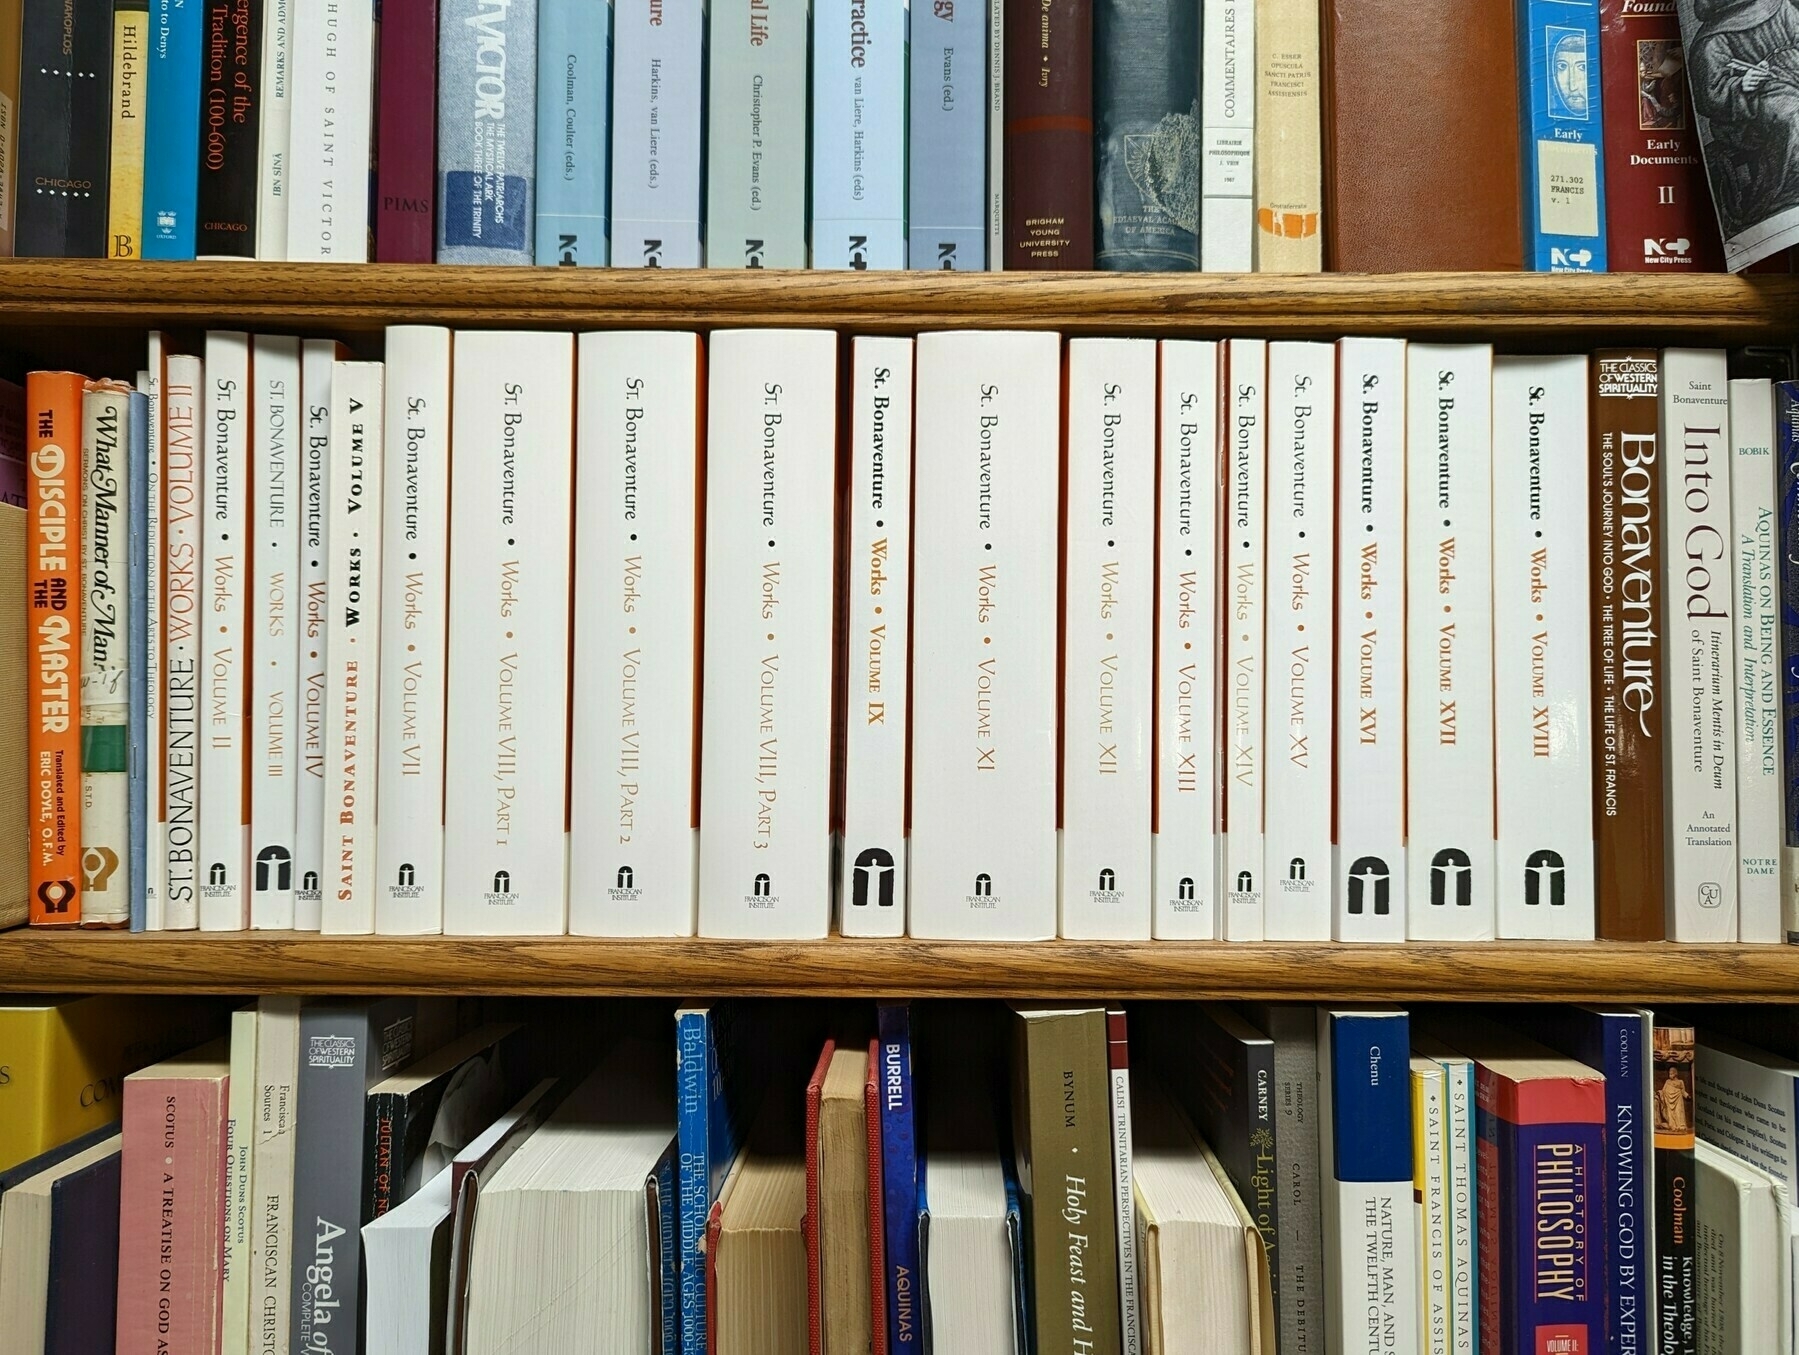 An entire shelf of books by Bonaventure